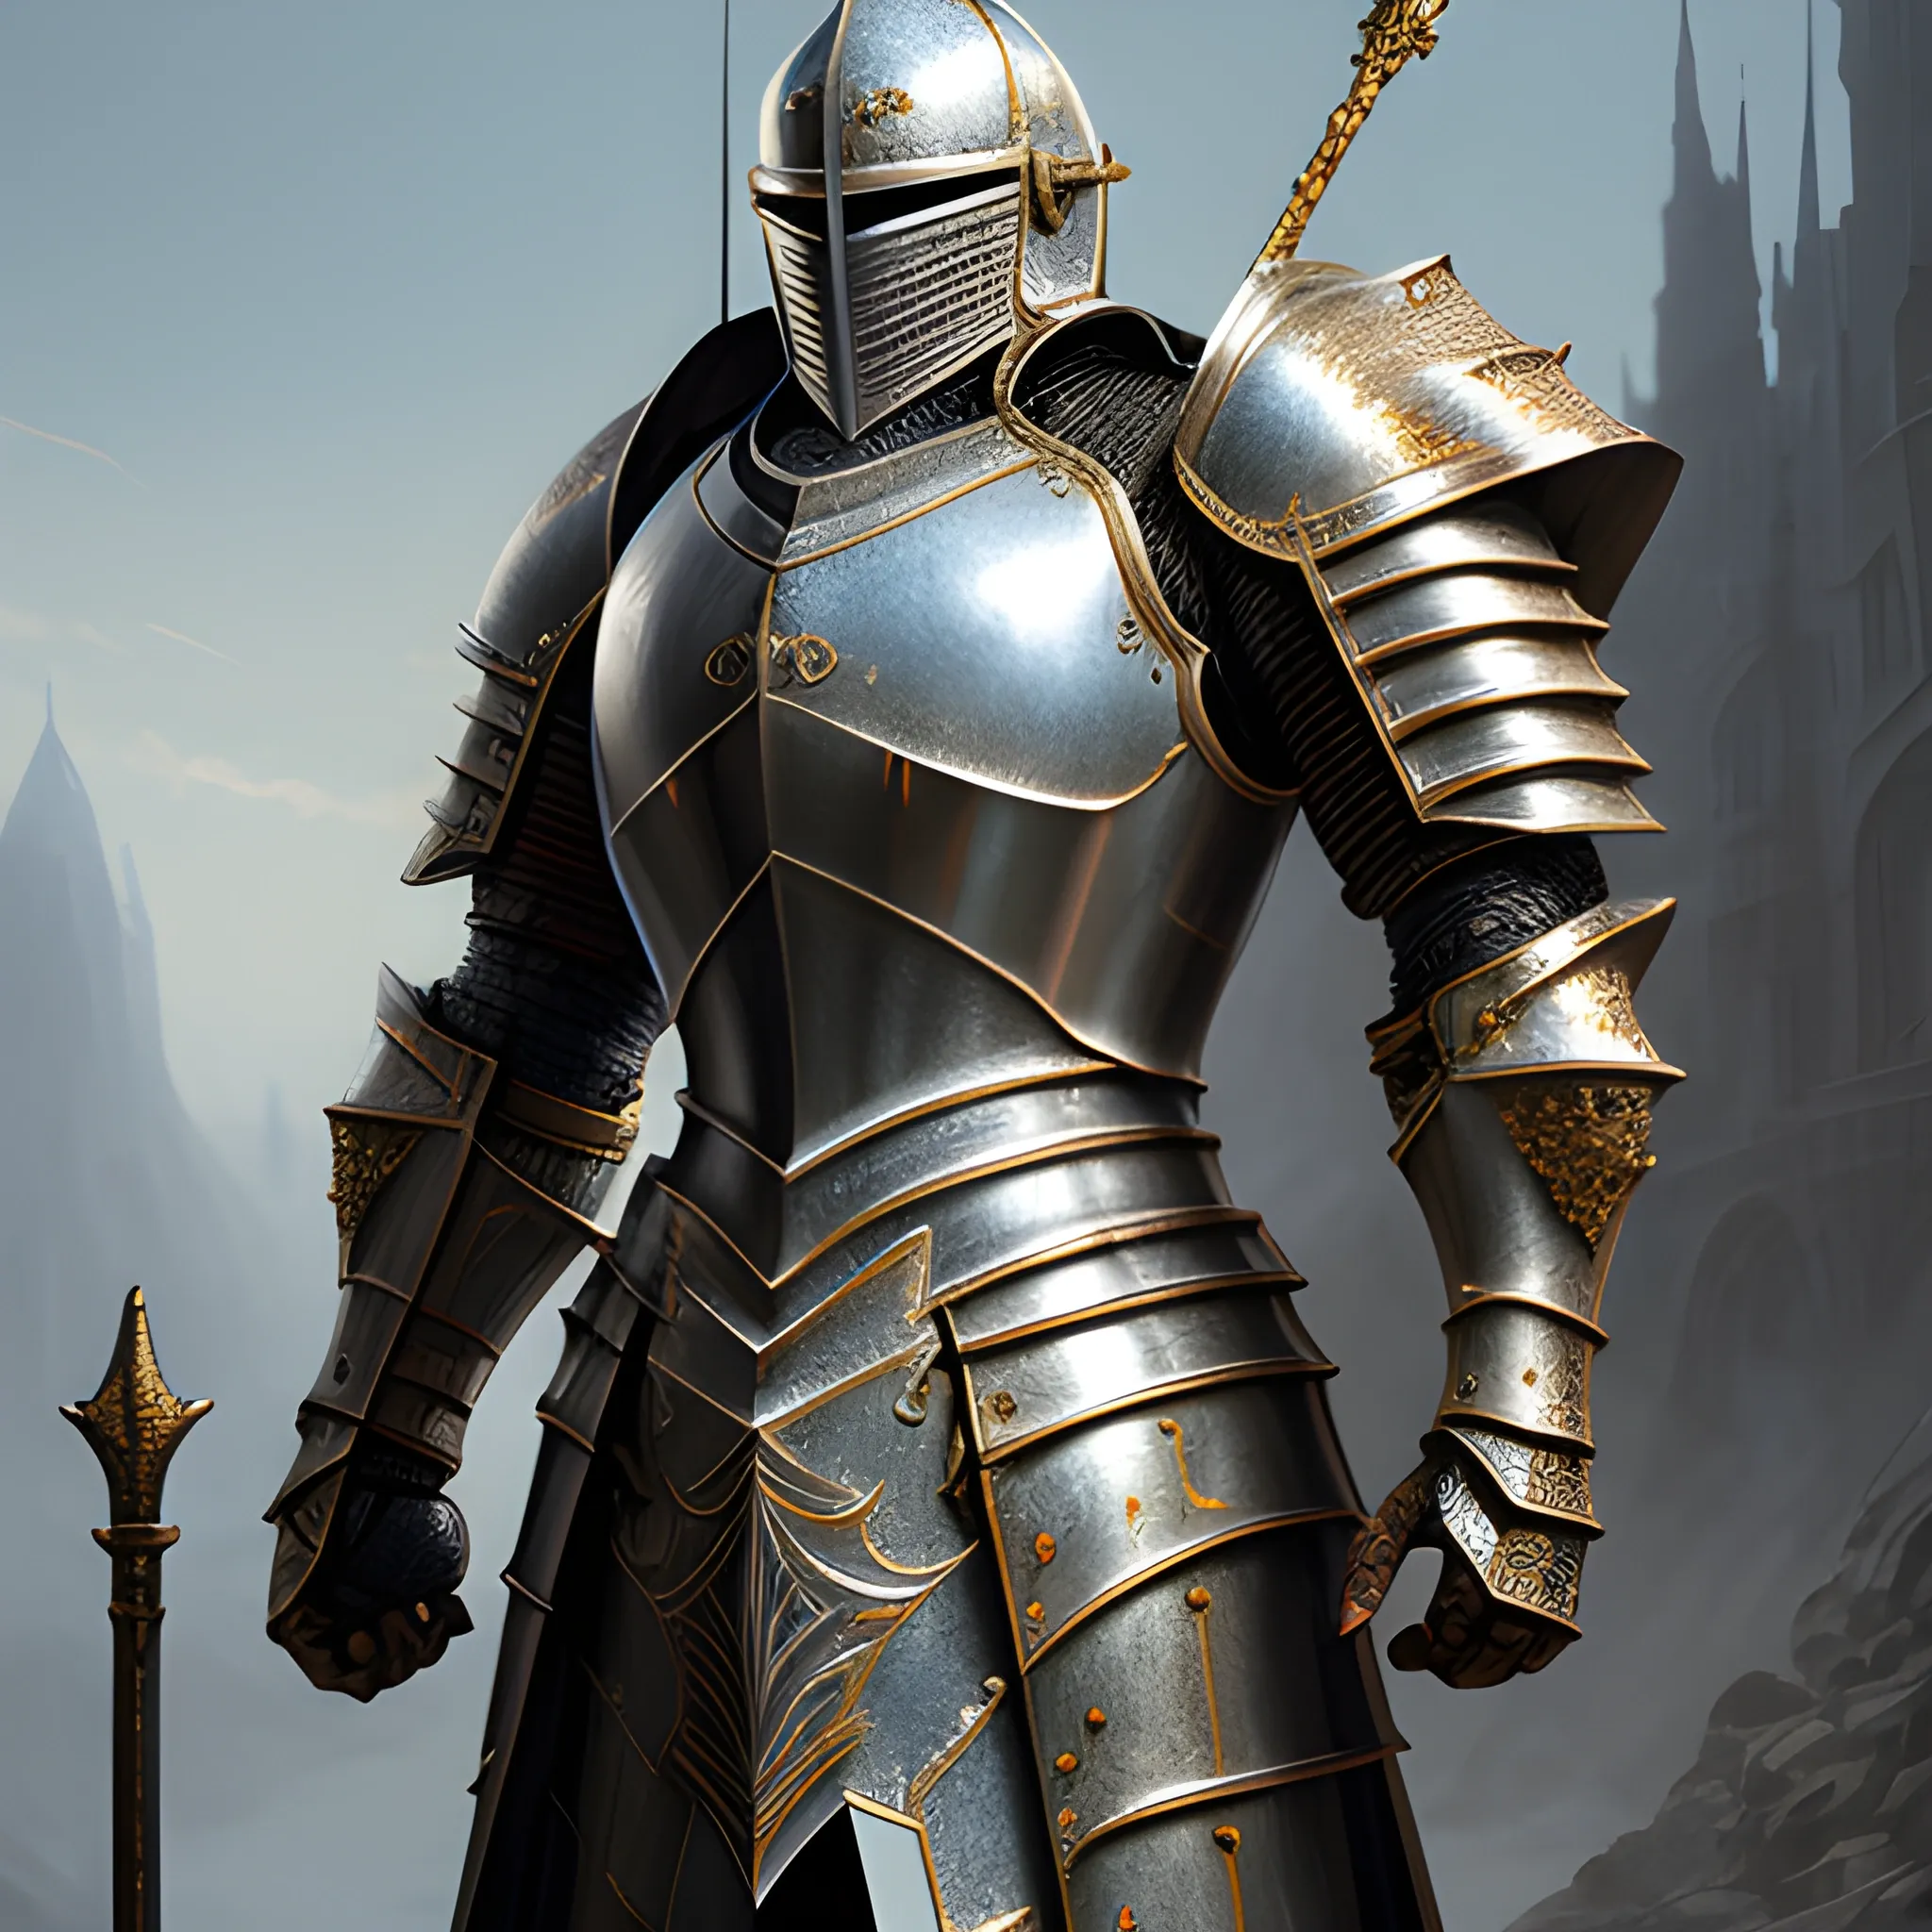 armored knight, full armor, saint knight, 8k, high resolution, h 